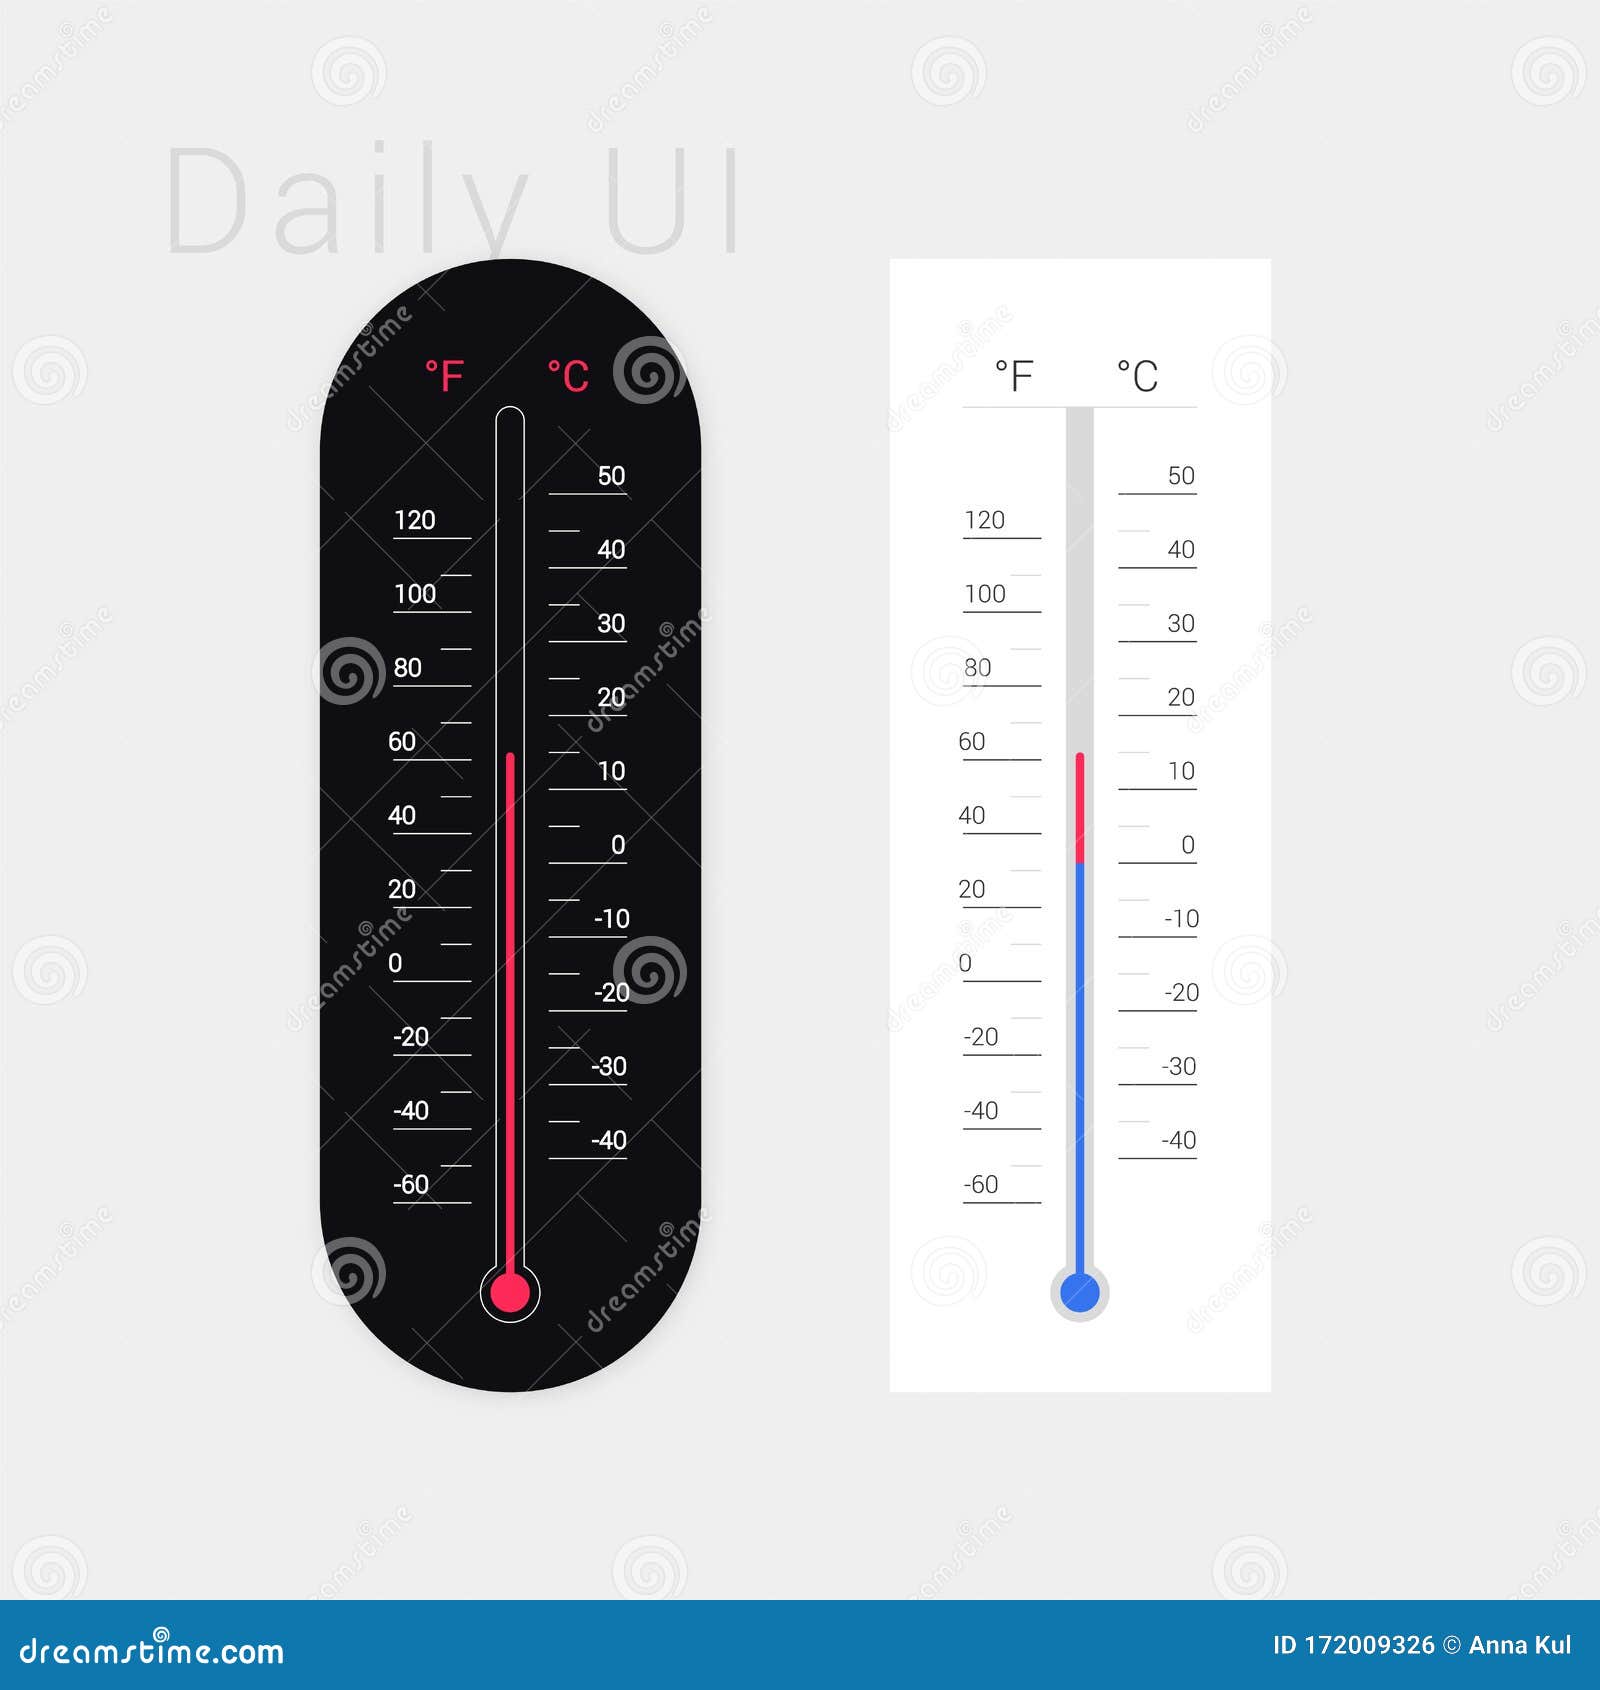 Hoofd Retoucheren bundel Thermometer Design. daily Ui Stock Vector - Illustration of concept,  equipment: 172009326